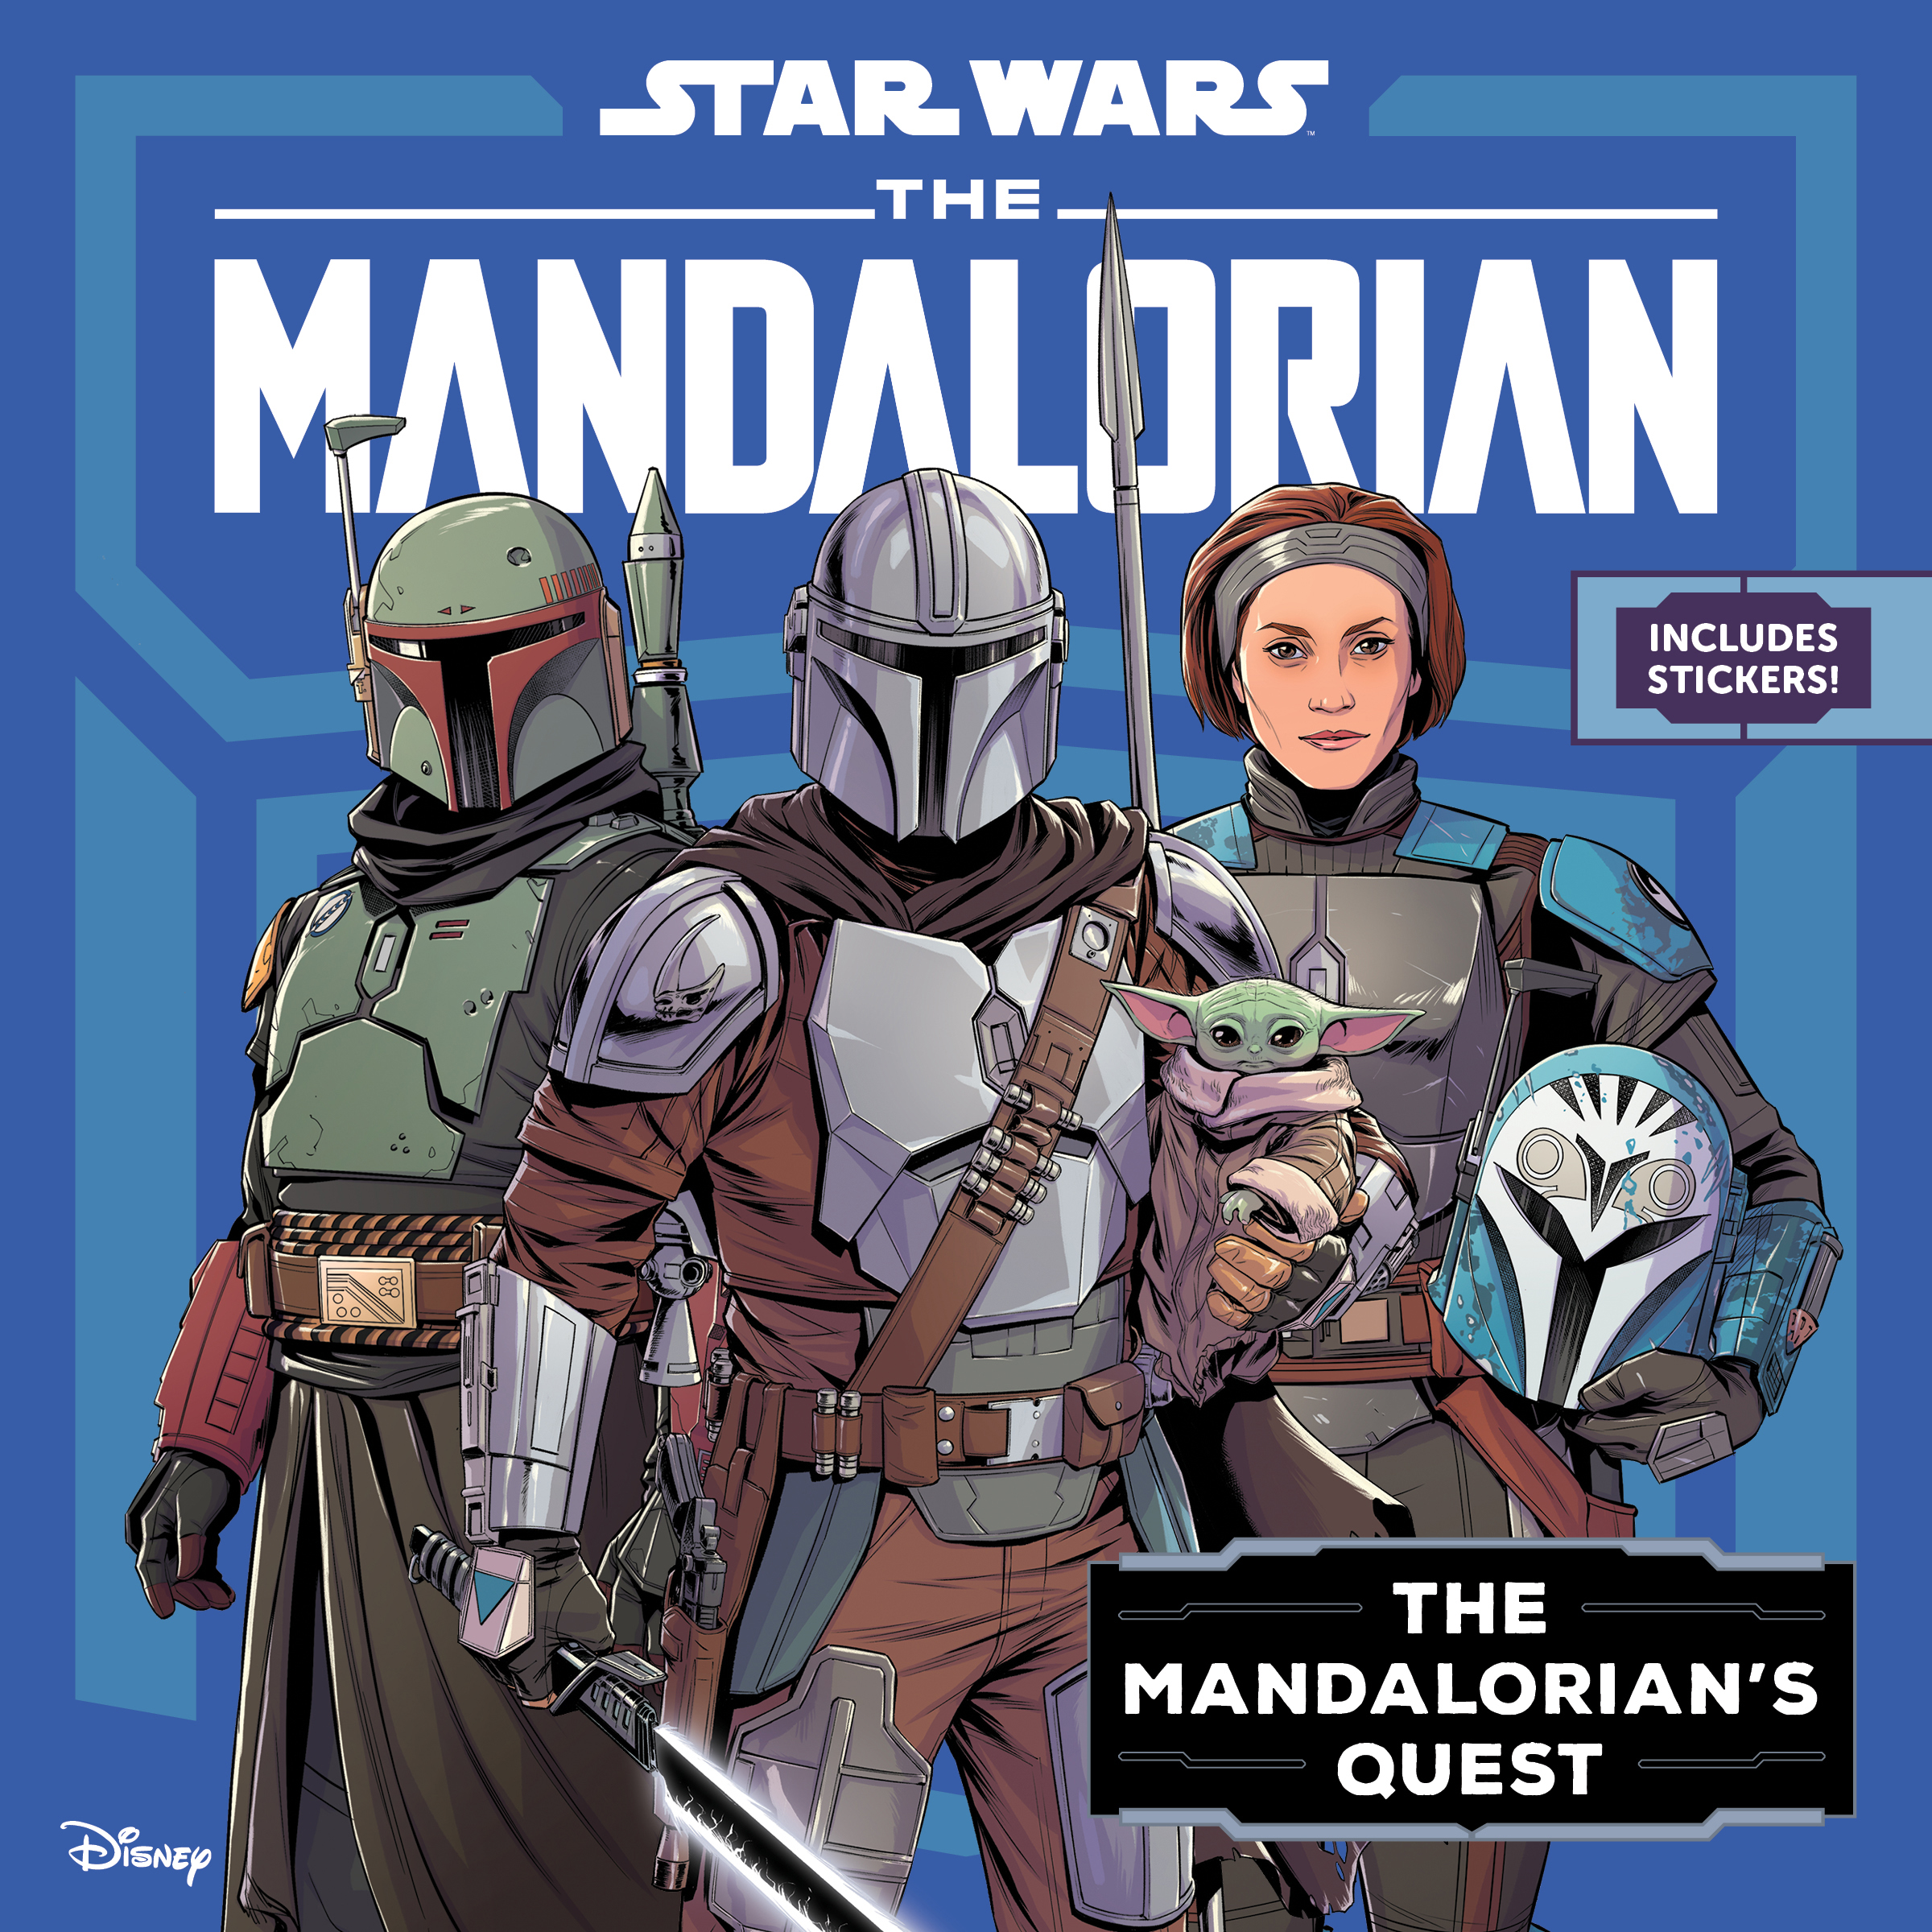 Star Wars: The Mandalorian: The Mandalorian's Quest by Brooke